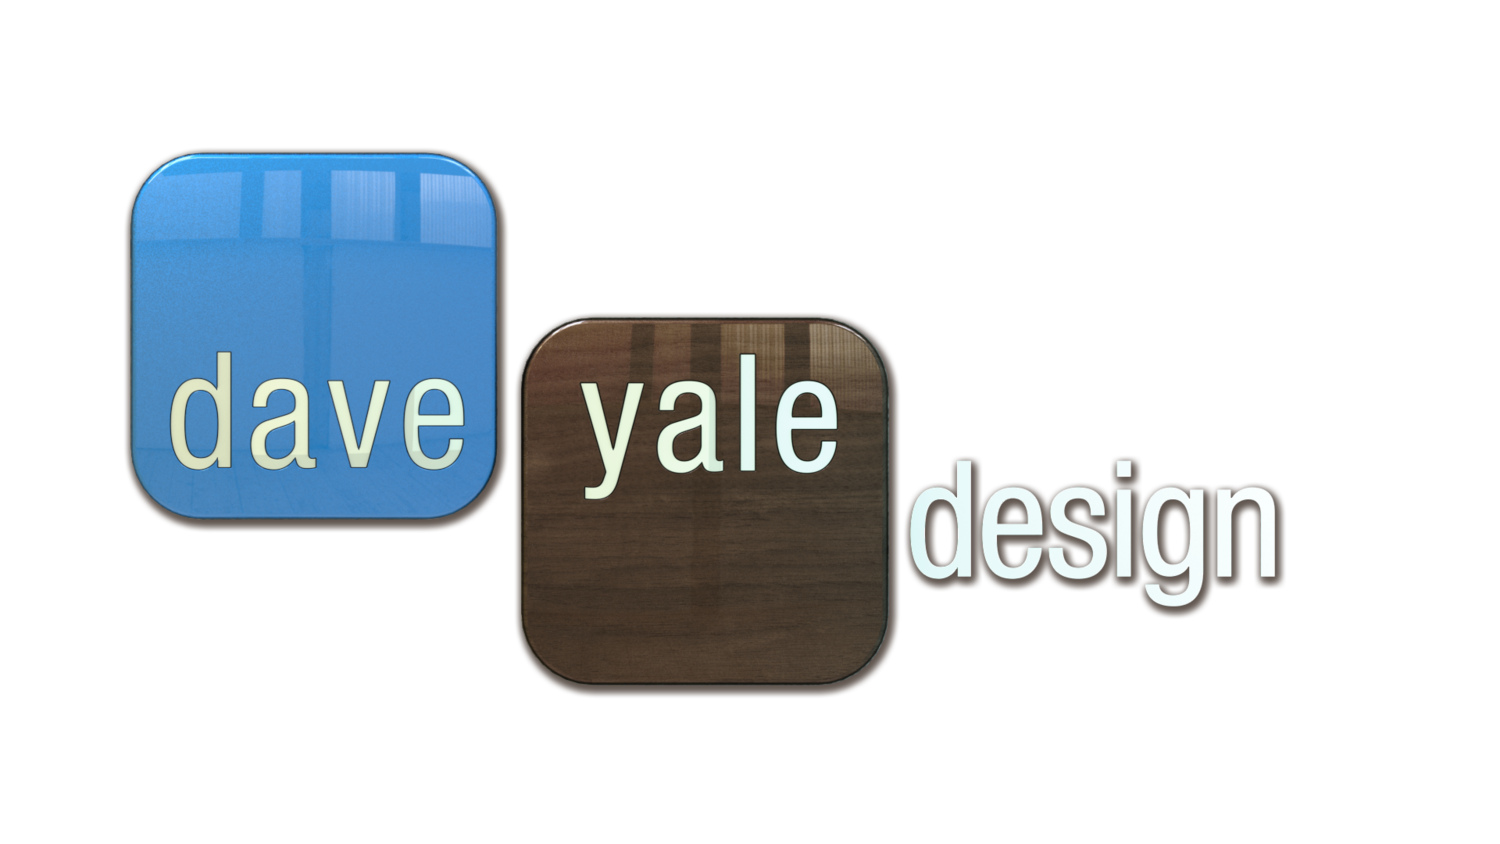 Dave Yale Design